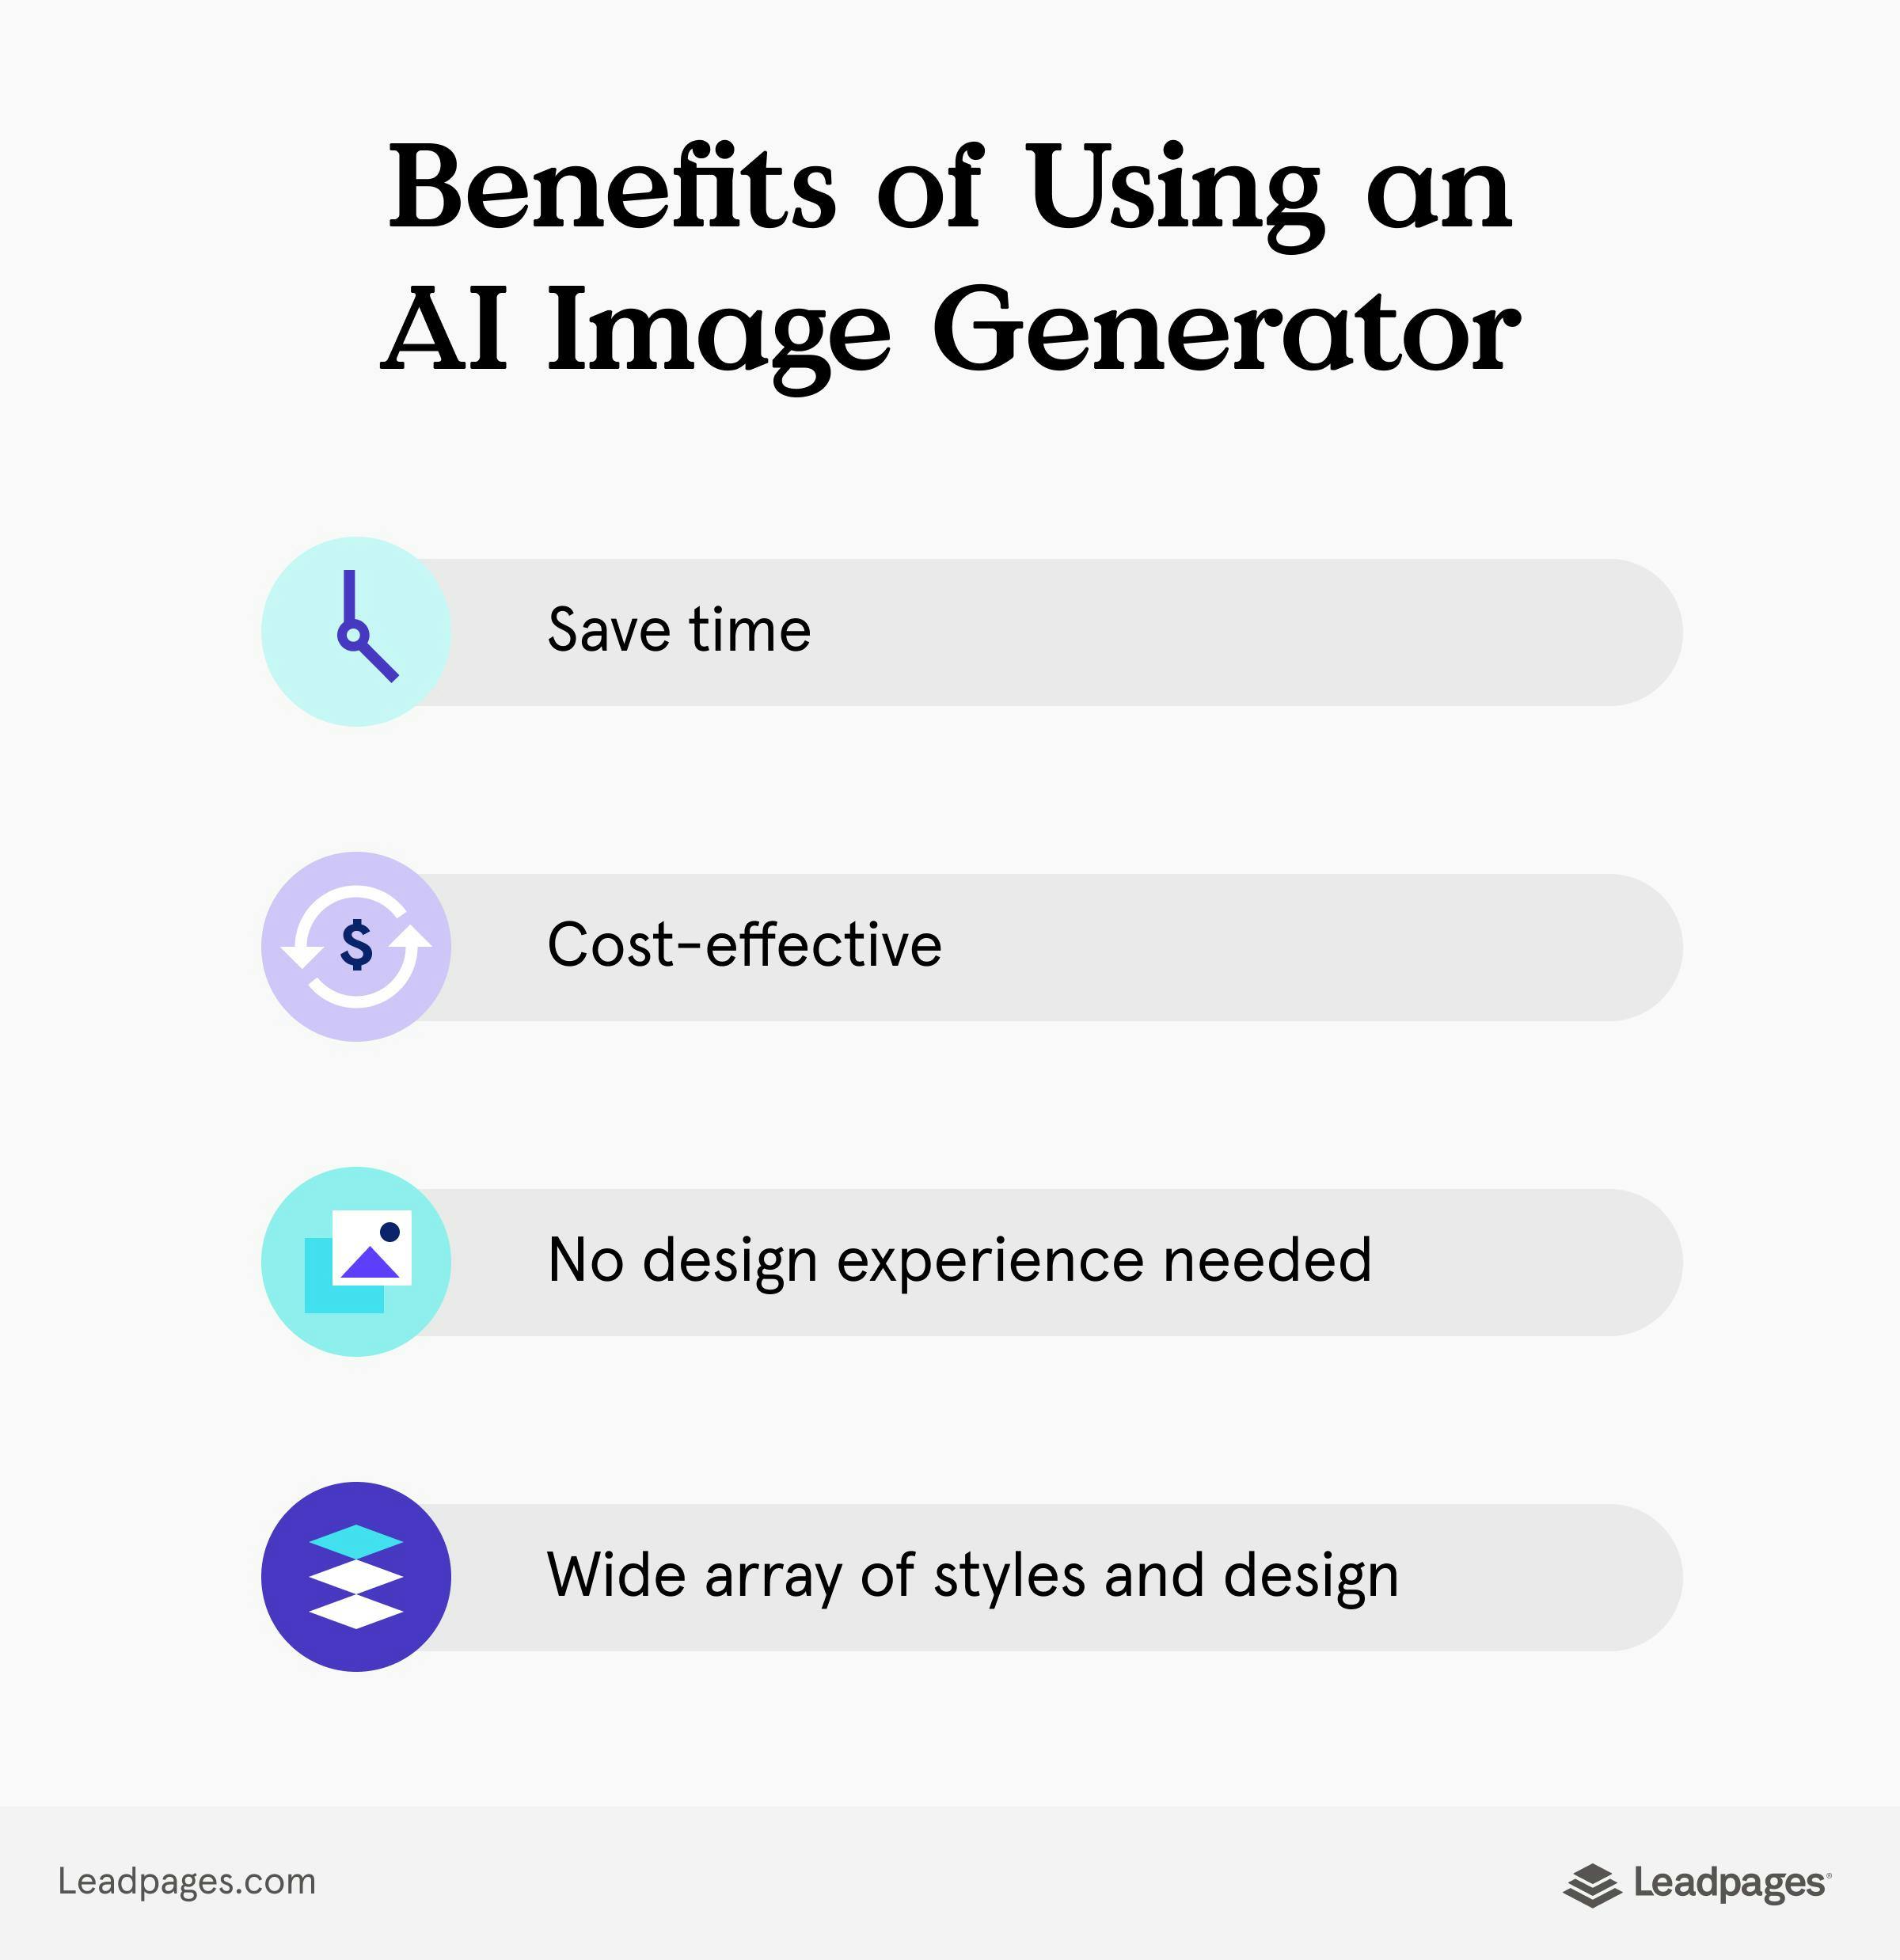 Canva AI Image Generator benefits